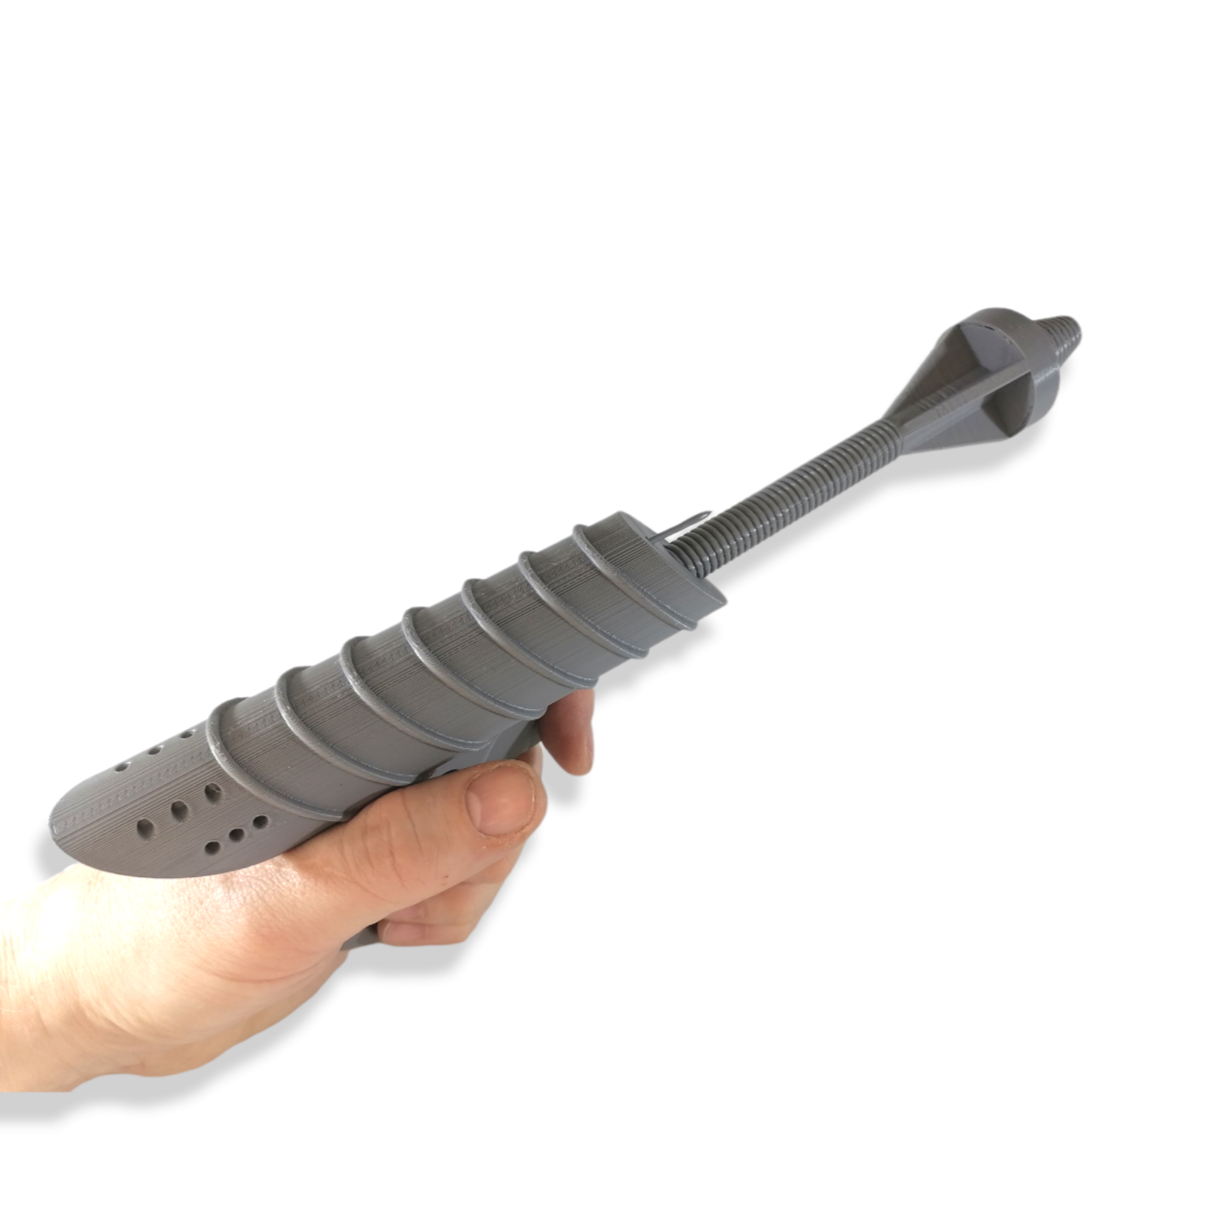 RAY GUN 1 - Sci-Fi Blaster - 3D Printed Replica